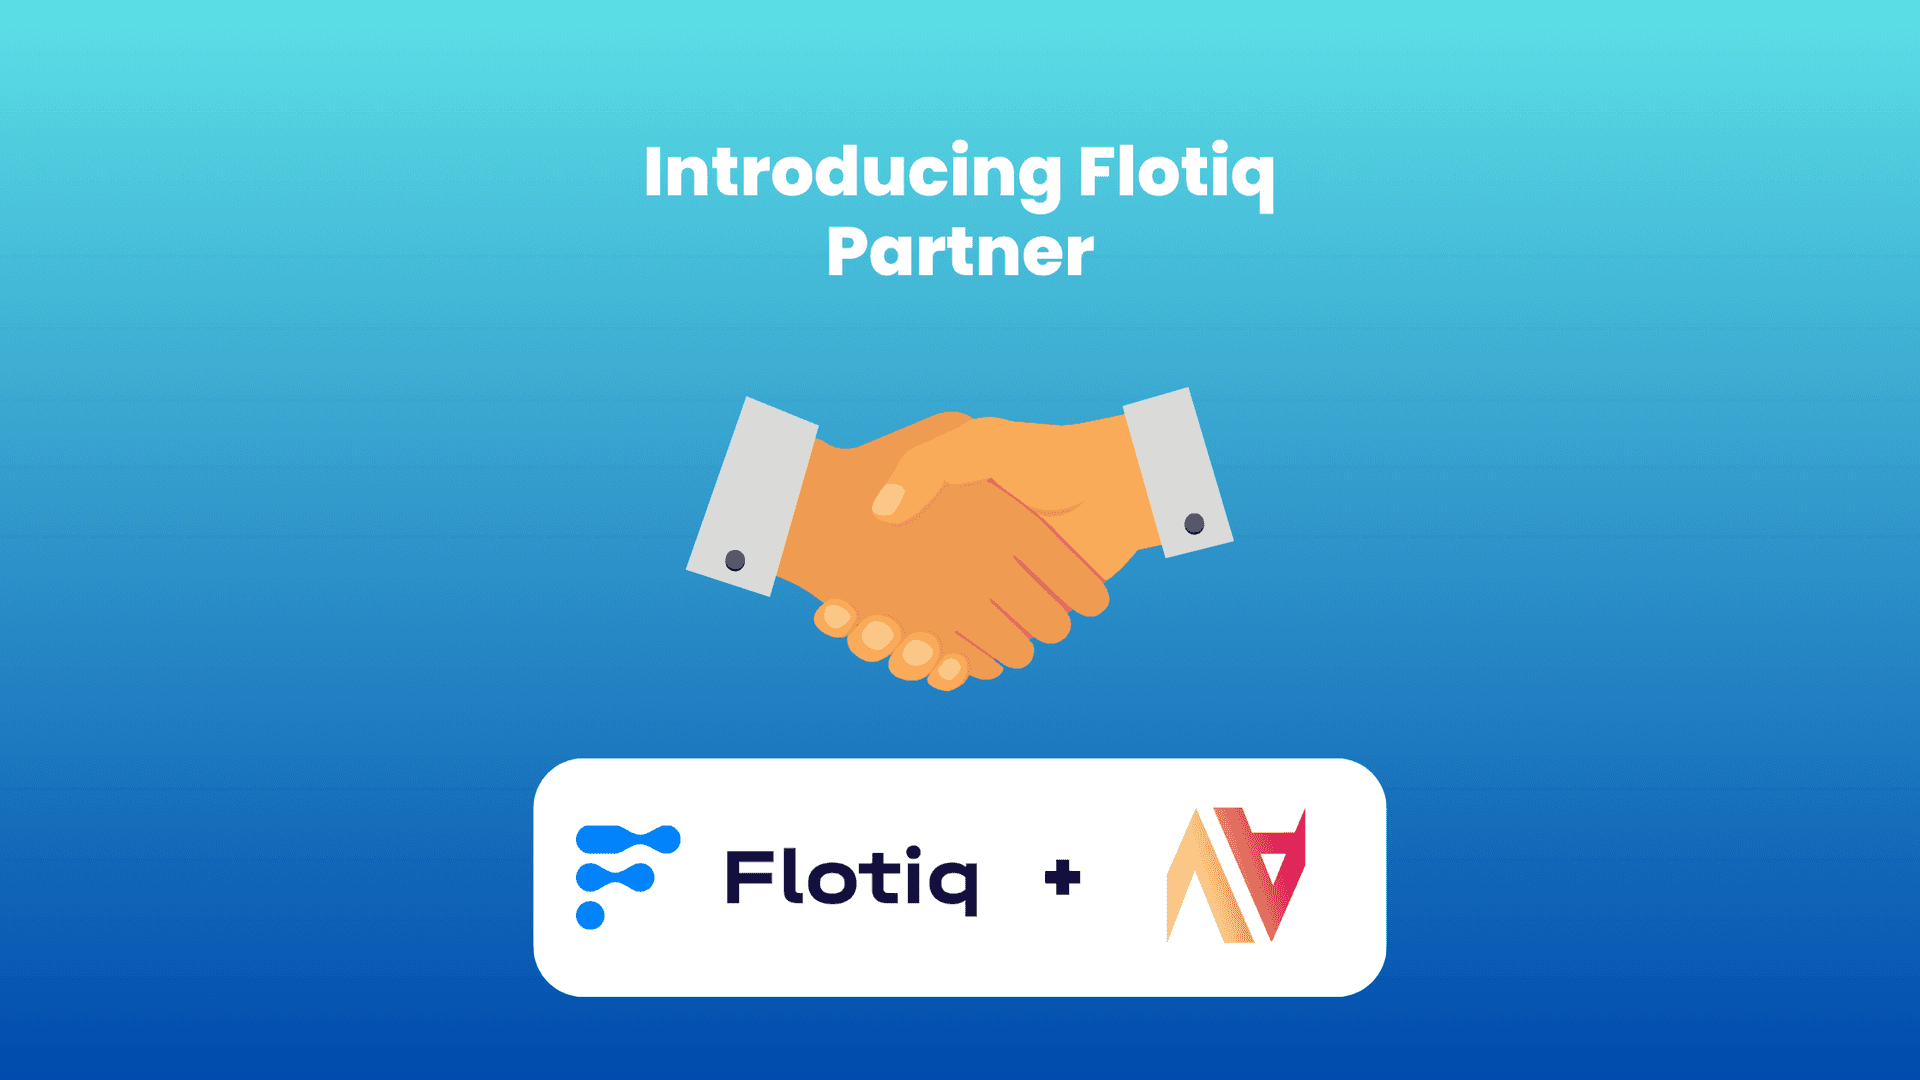 Partner spotlight - Alergeek Ventures joins the Flotiq Partner Program